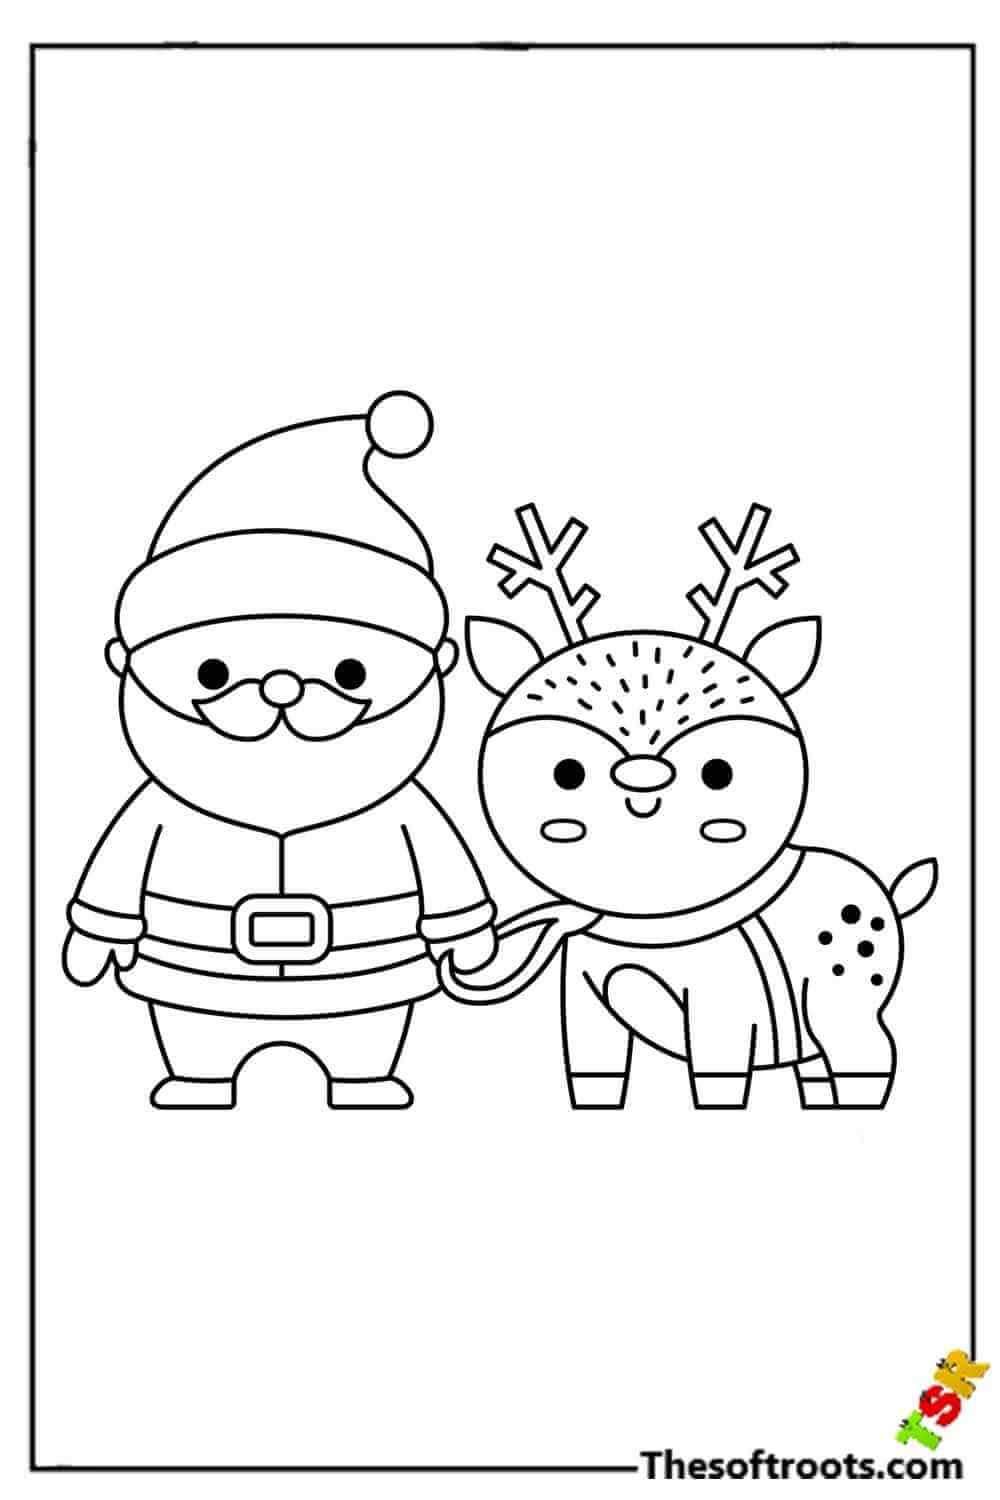 Santa Claus Coloring pages